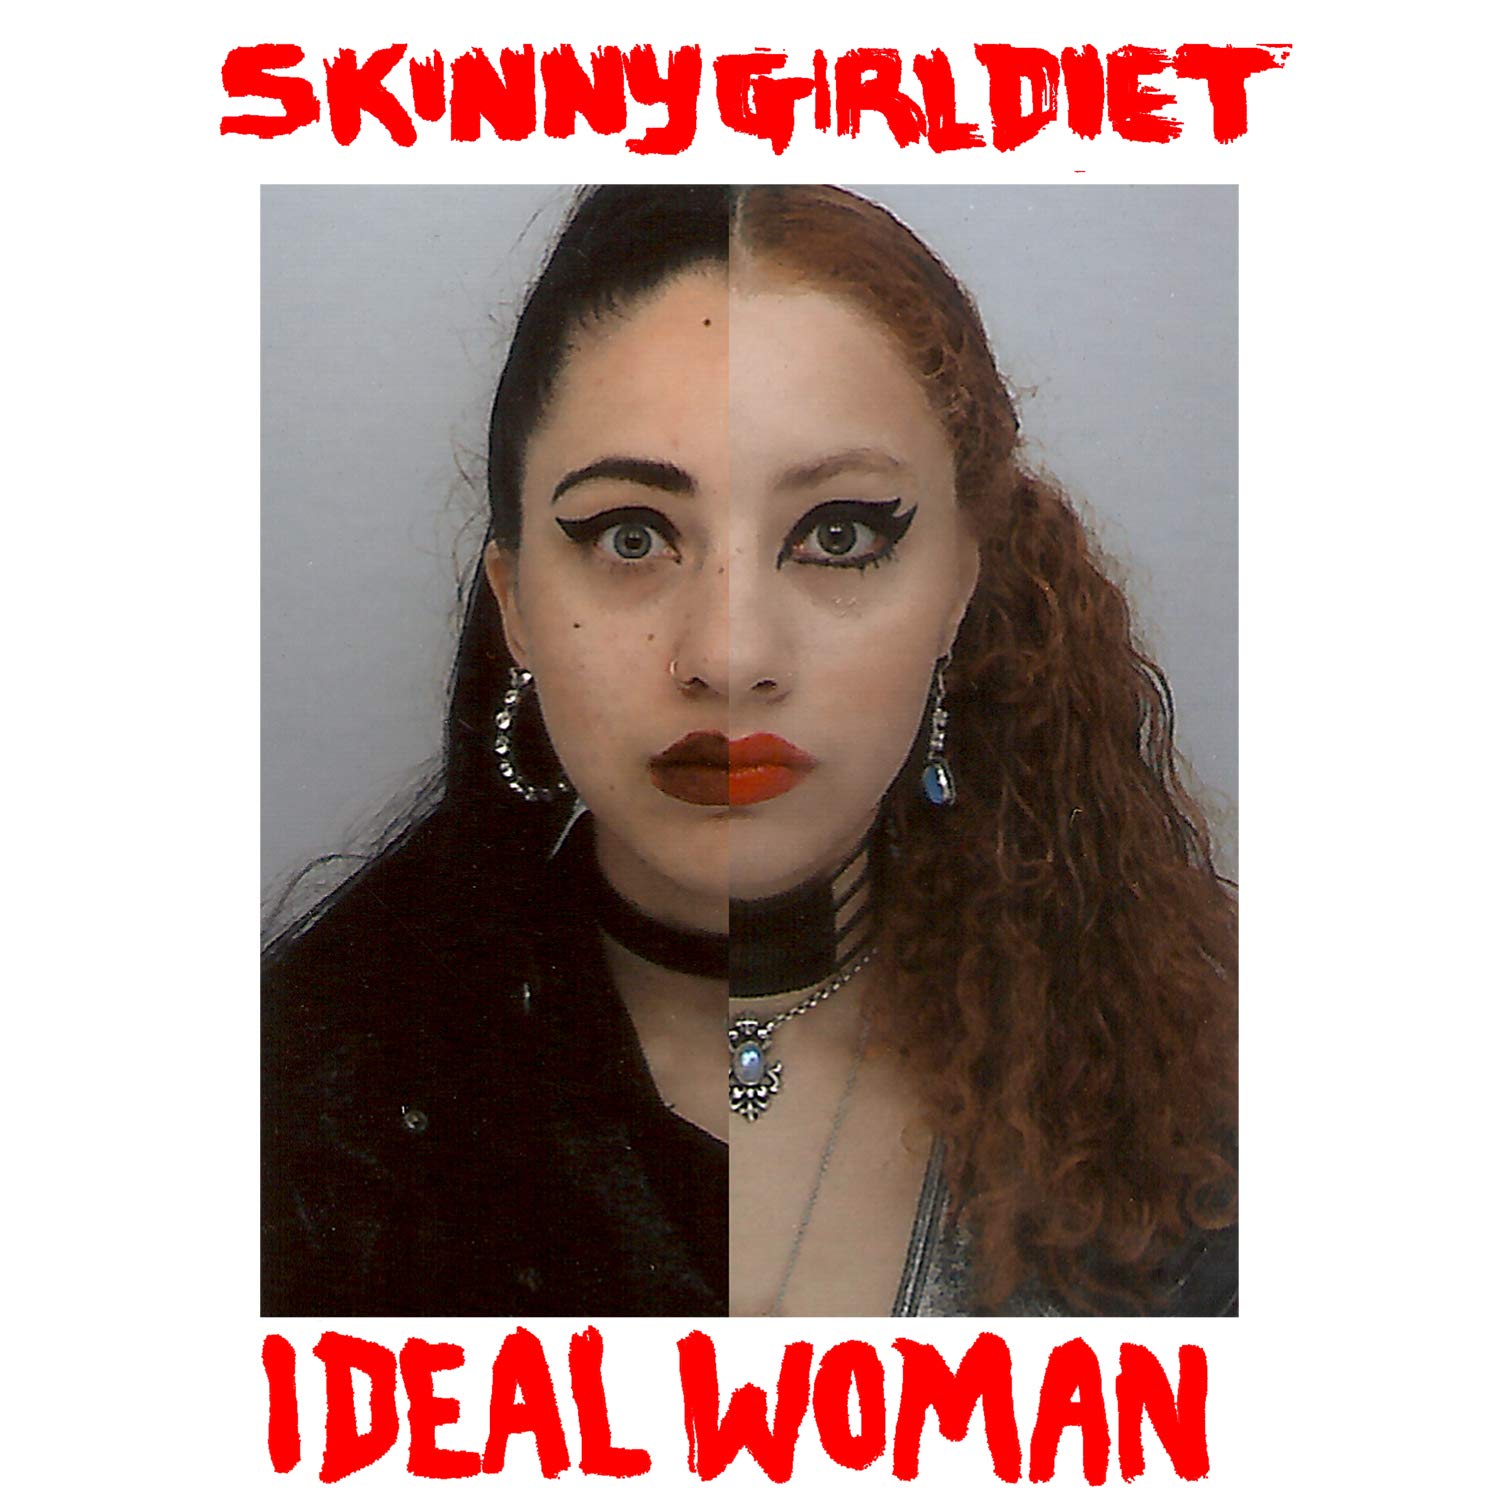 Skinny Girl Diet Ideal Woman Upcoming Vinyl February 8 2019